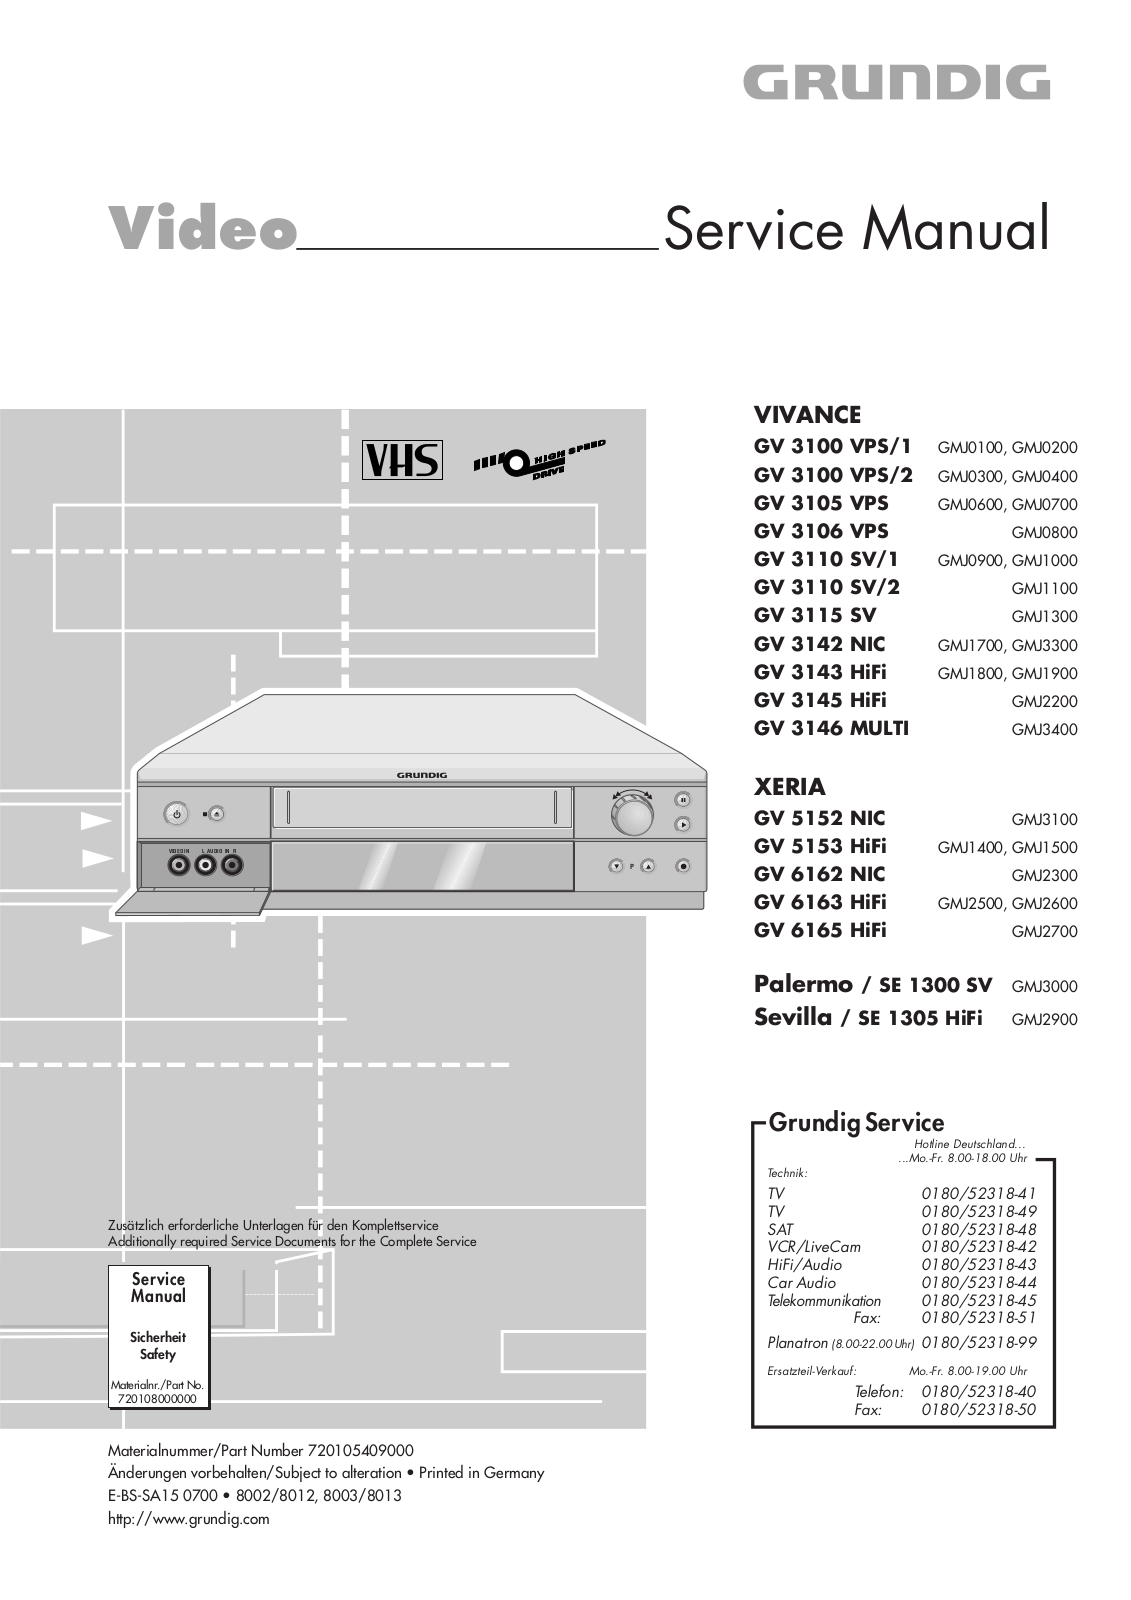 Grundig GV 6163 HiFi, GV 3100 VPS-1, GV 3105 VPS, GV 3106 VPS, GV 3110 SV-1 Service Manual